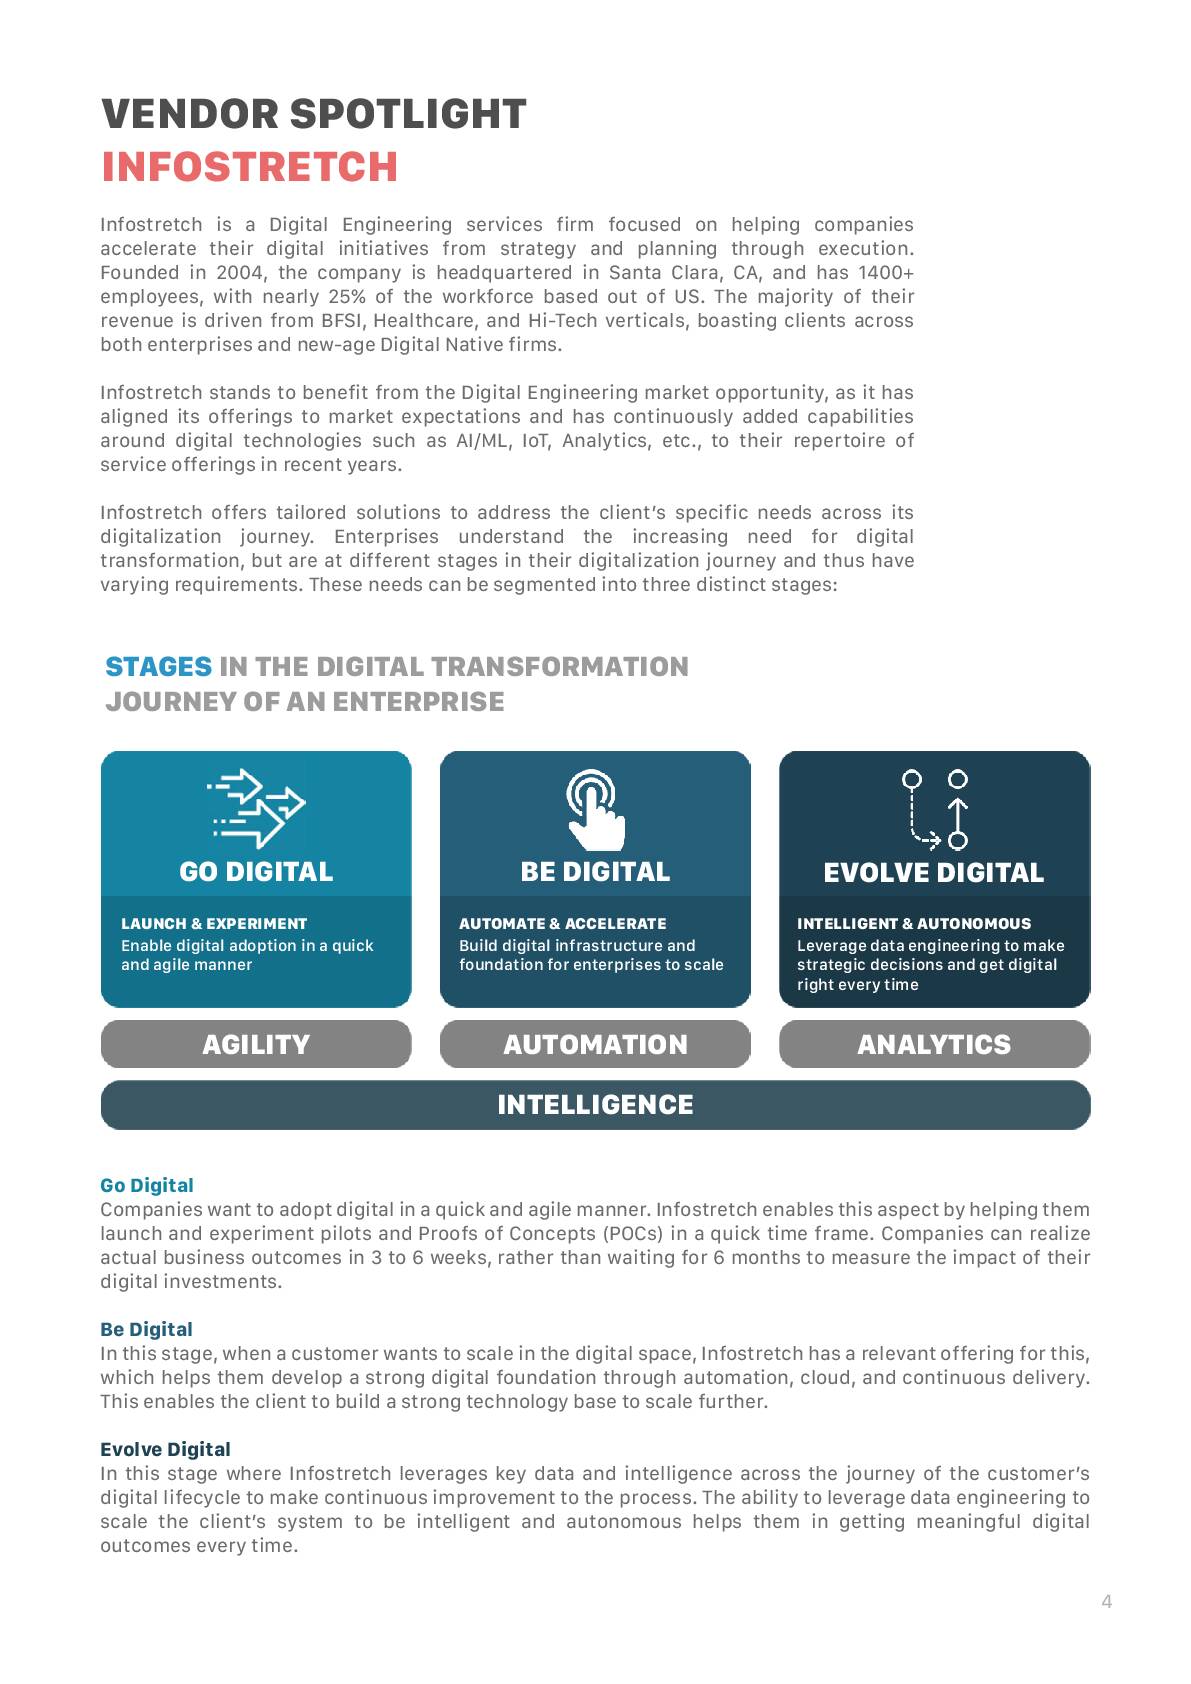 Digital Engineering Services Market Snapshot4